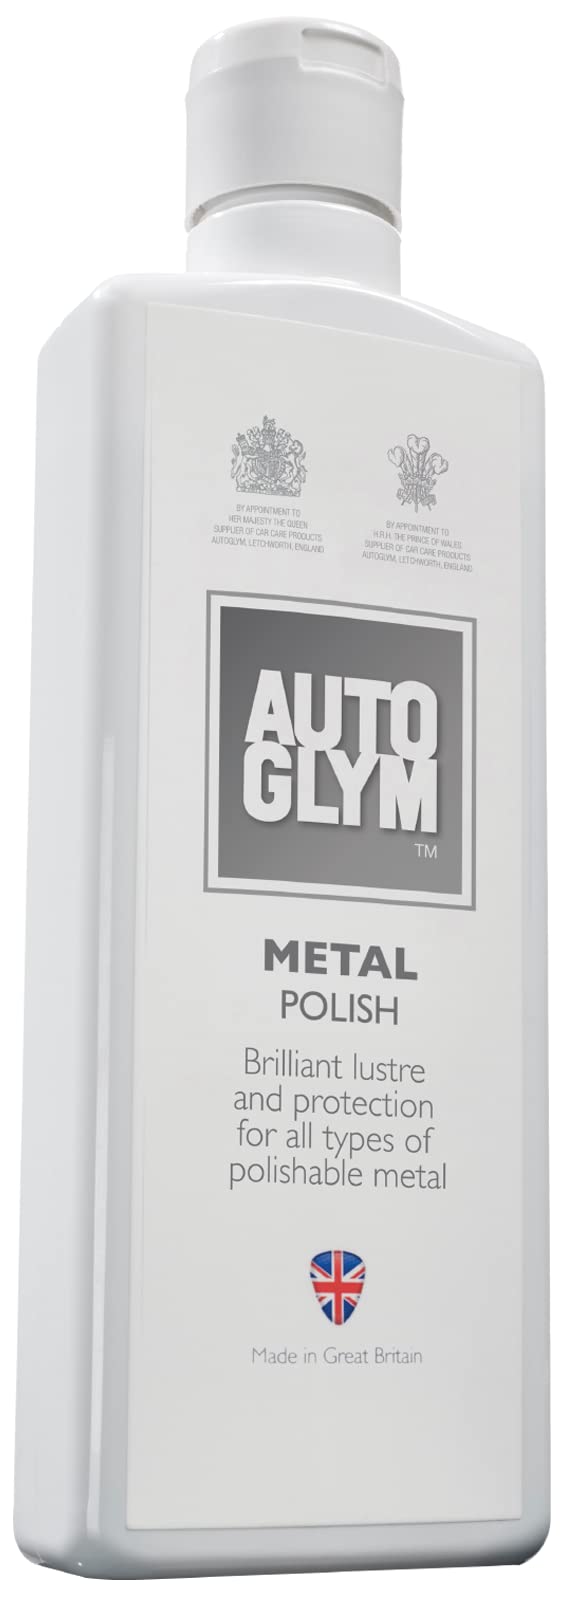 Autoglym Metall Polish 325ML von Autoglym